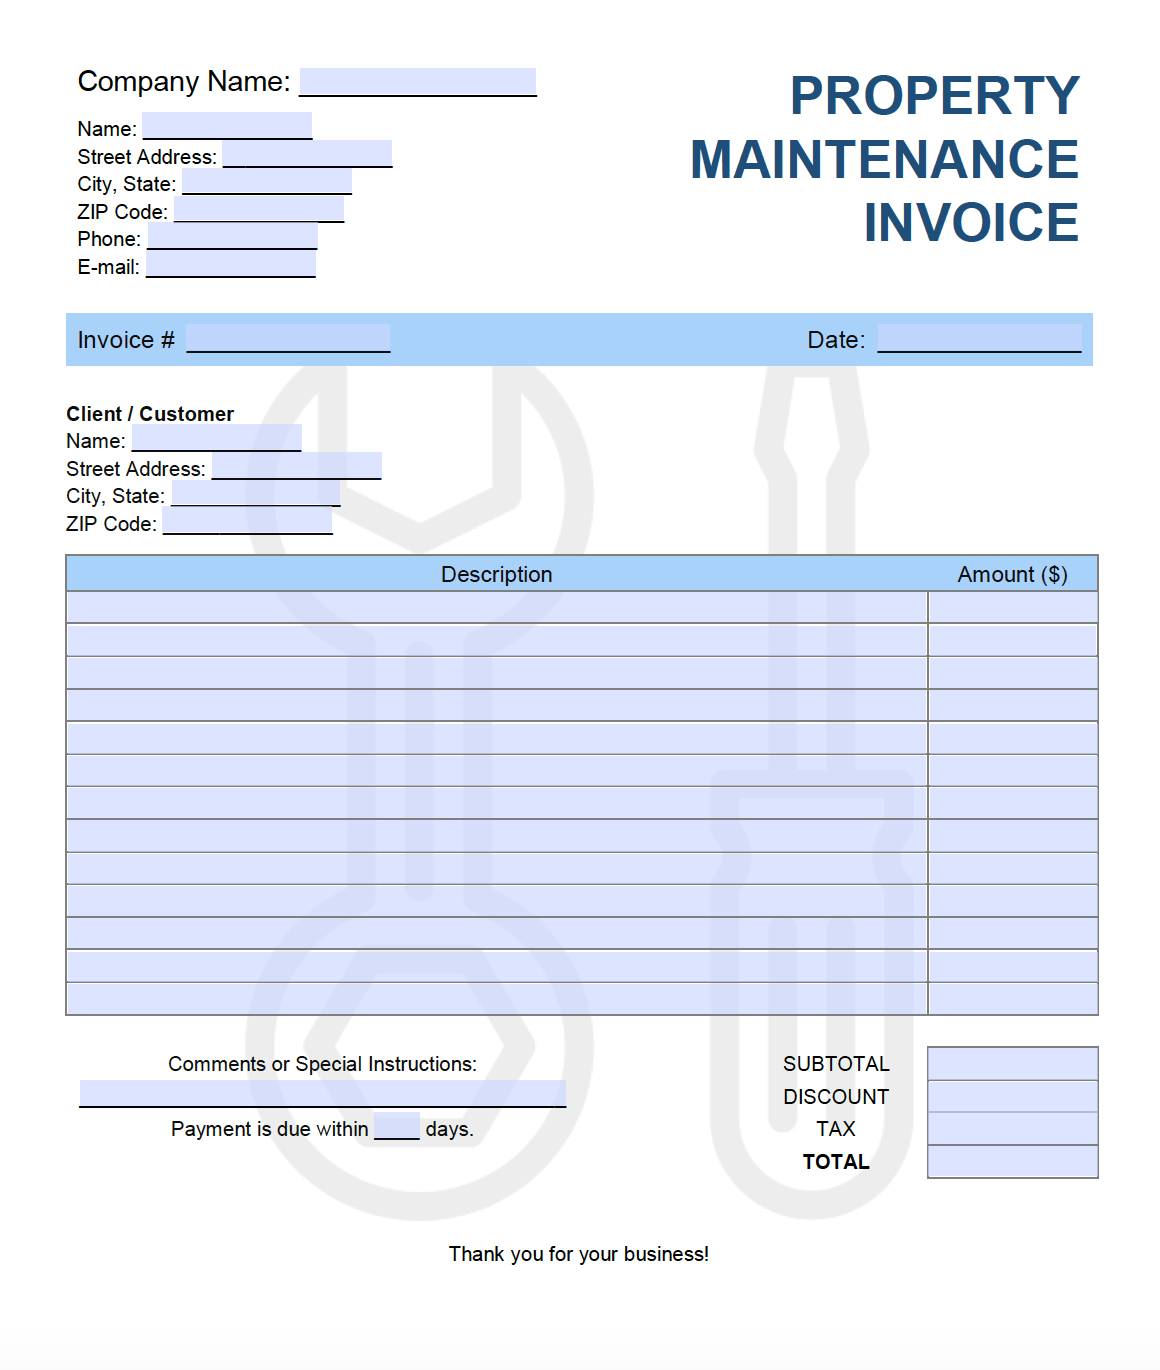 Free Property Maintenance Invoice Template | Pdf | Word | Excel with Maintenance Invoice Template Free